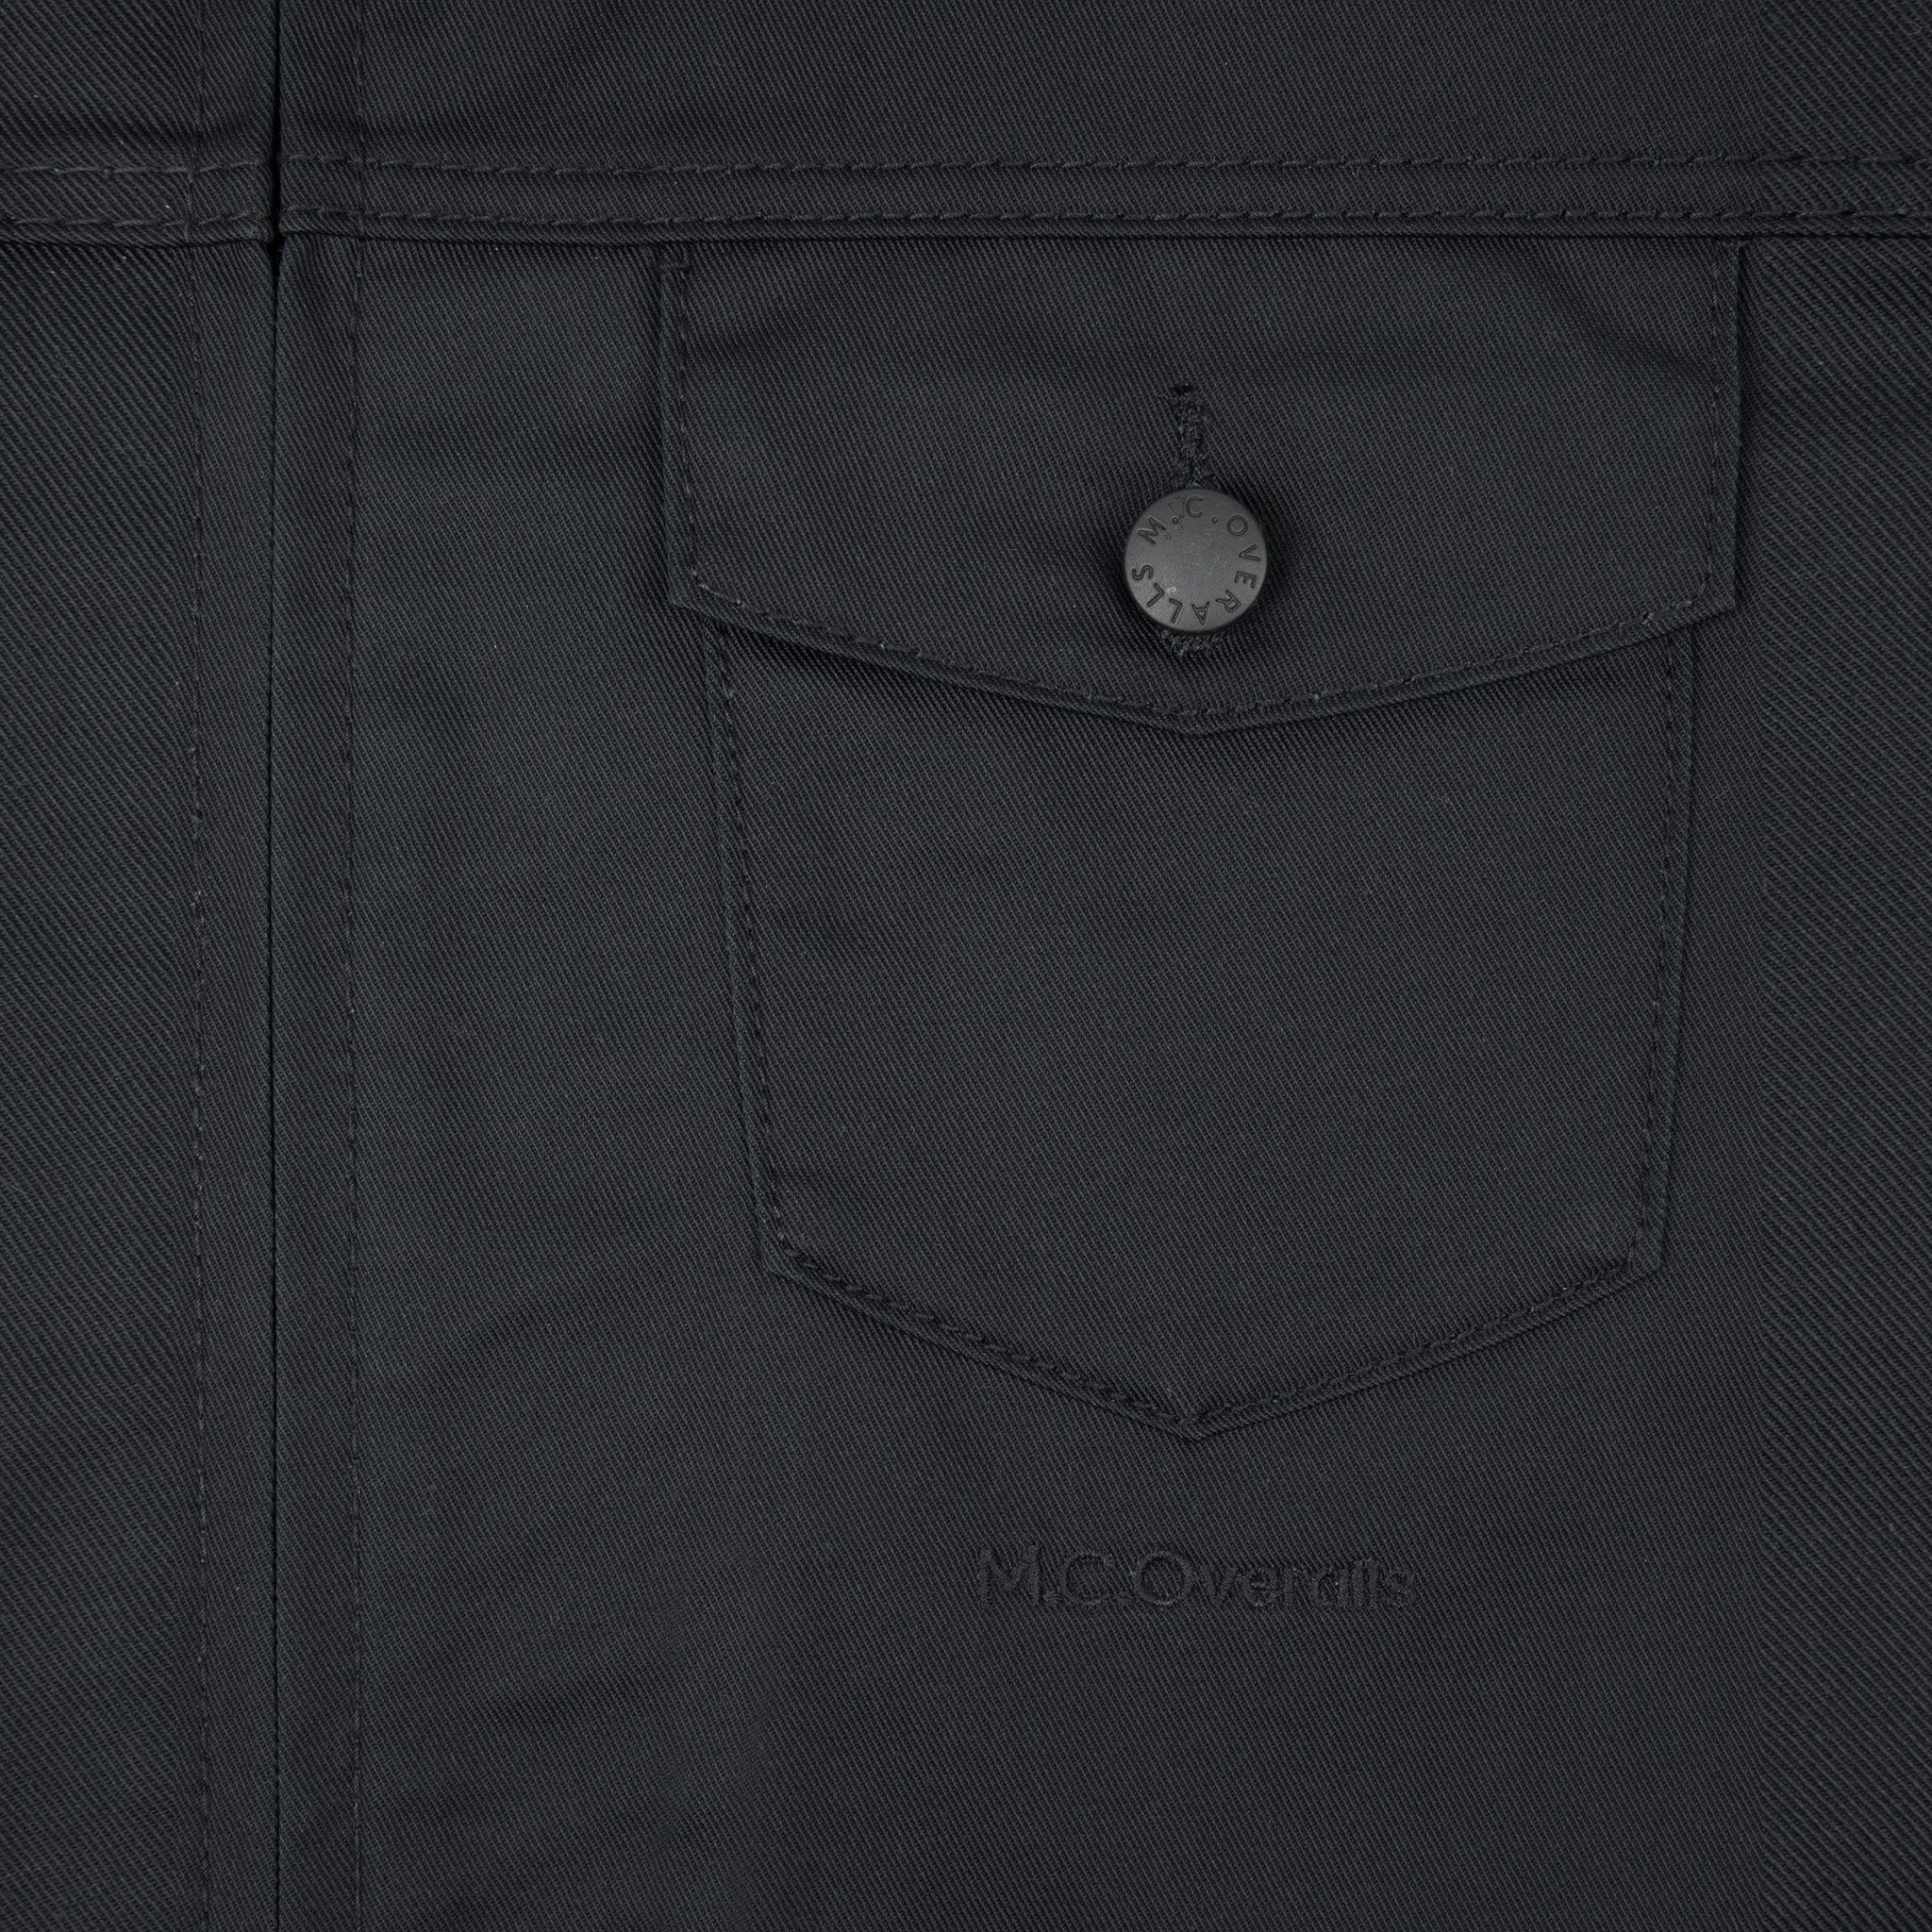 Premium Pockets of Black Workwear Overalls in Soho, London, UK.